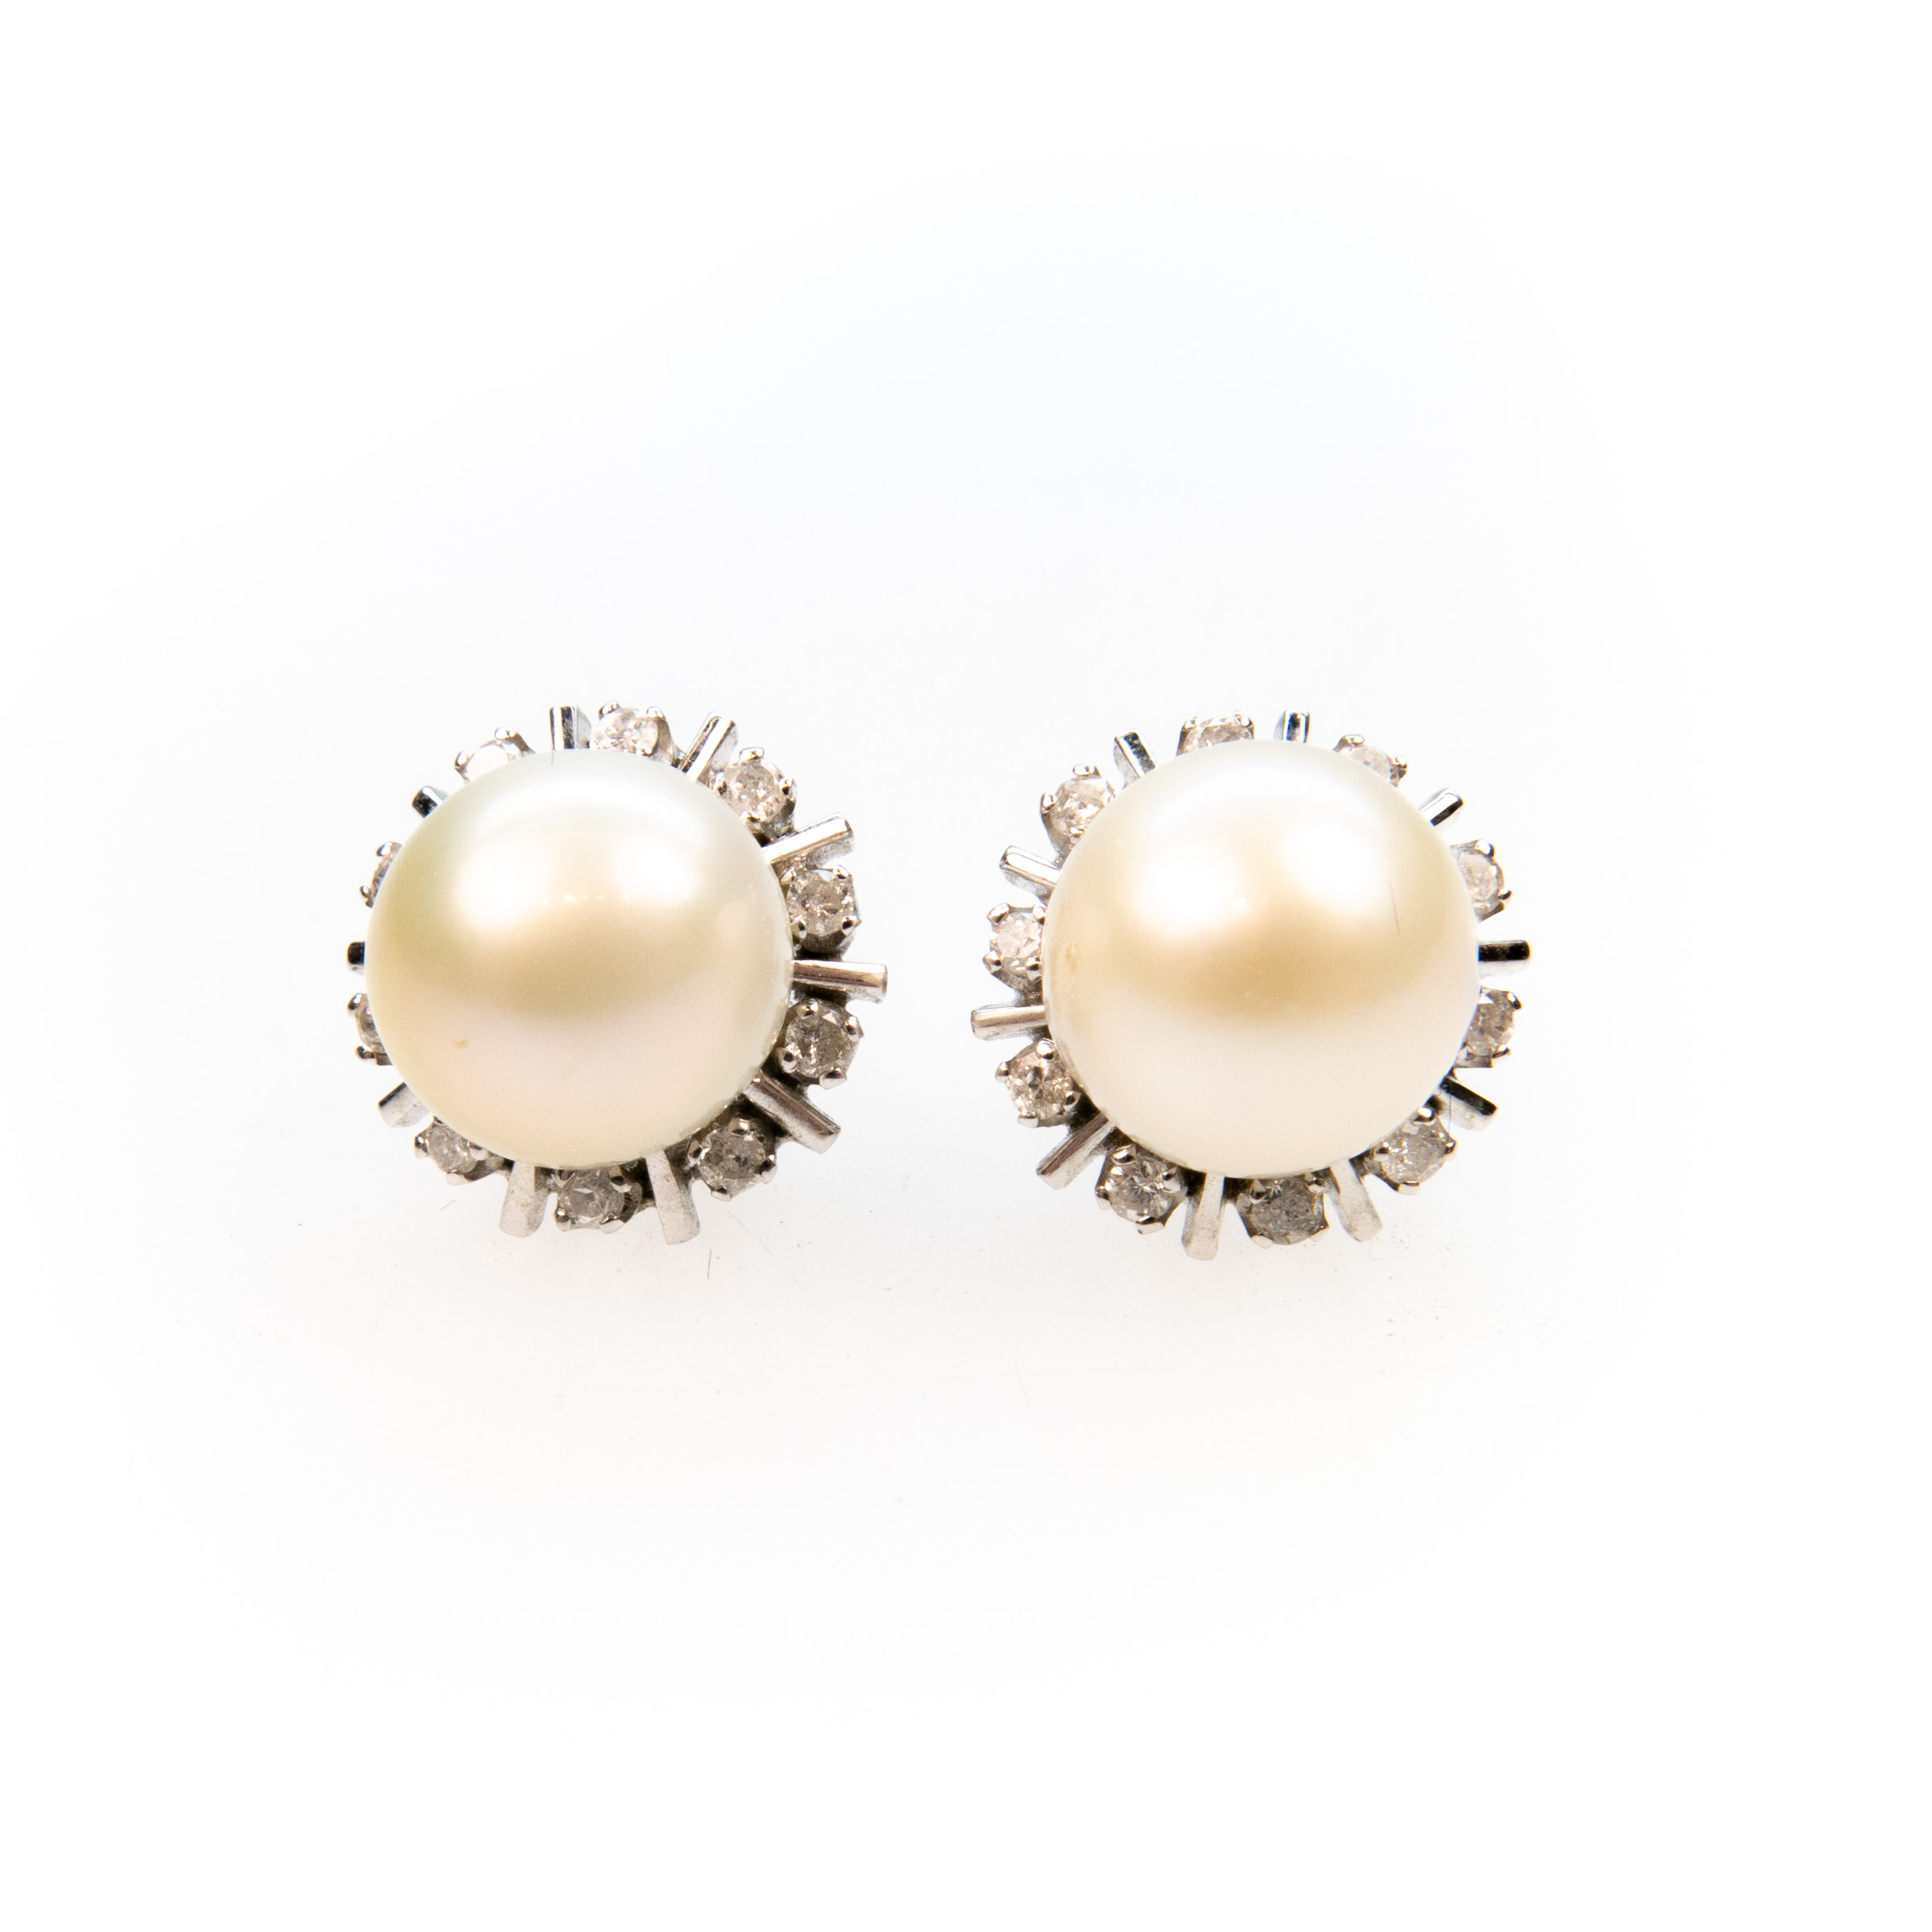 Pair Of 14K White Gold Button Earrings